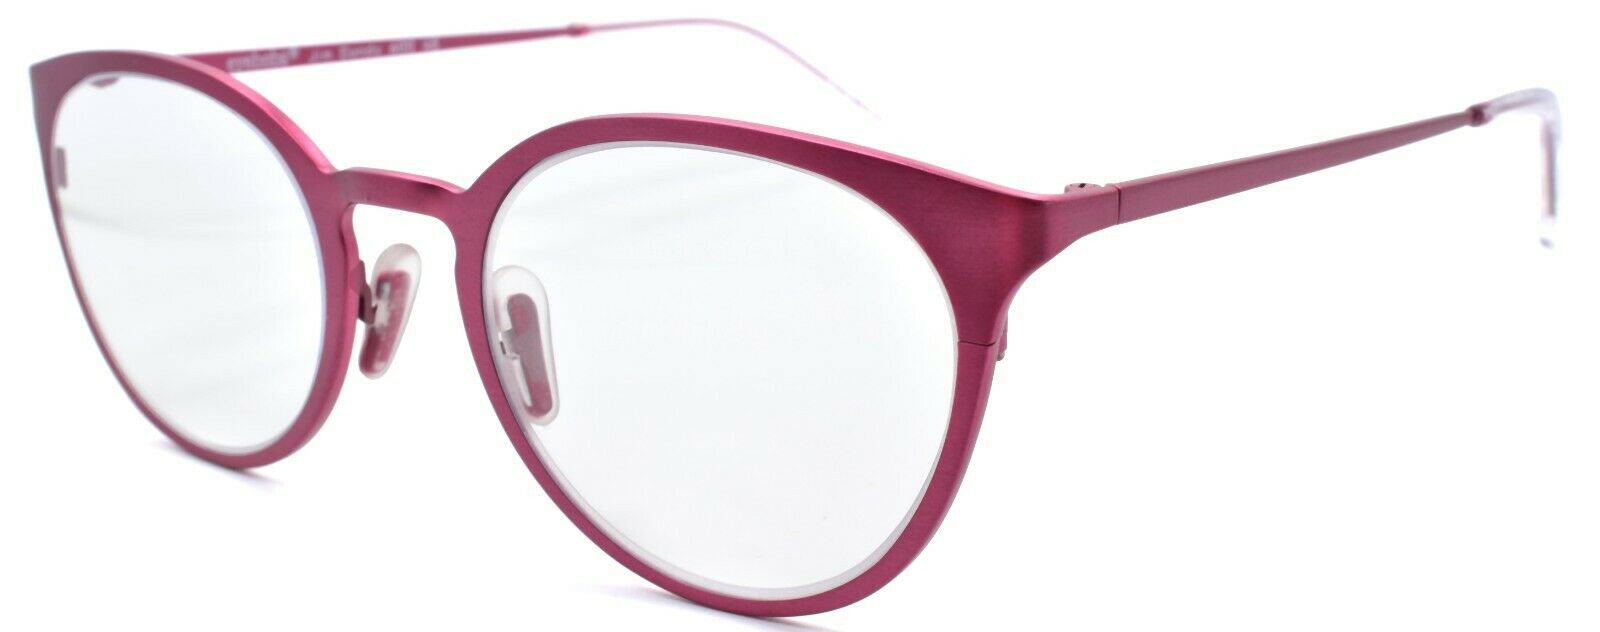 1-Eyebobs Jim Dandy 600 45 Reading Glasses Pink +2.50-842754137737-IKSpecs